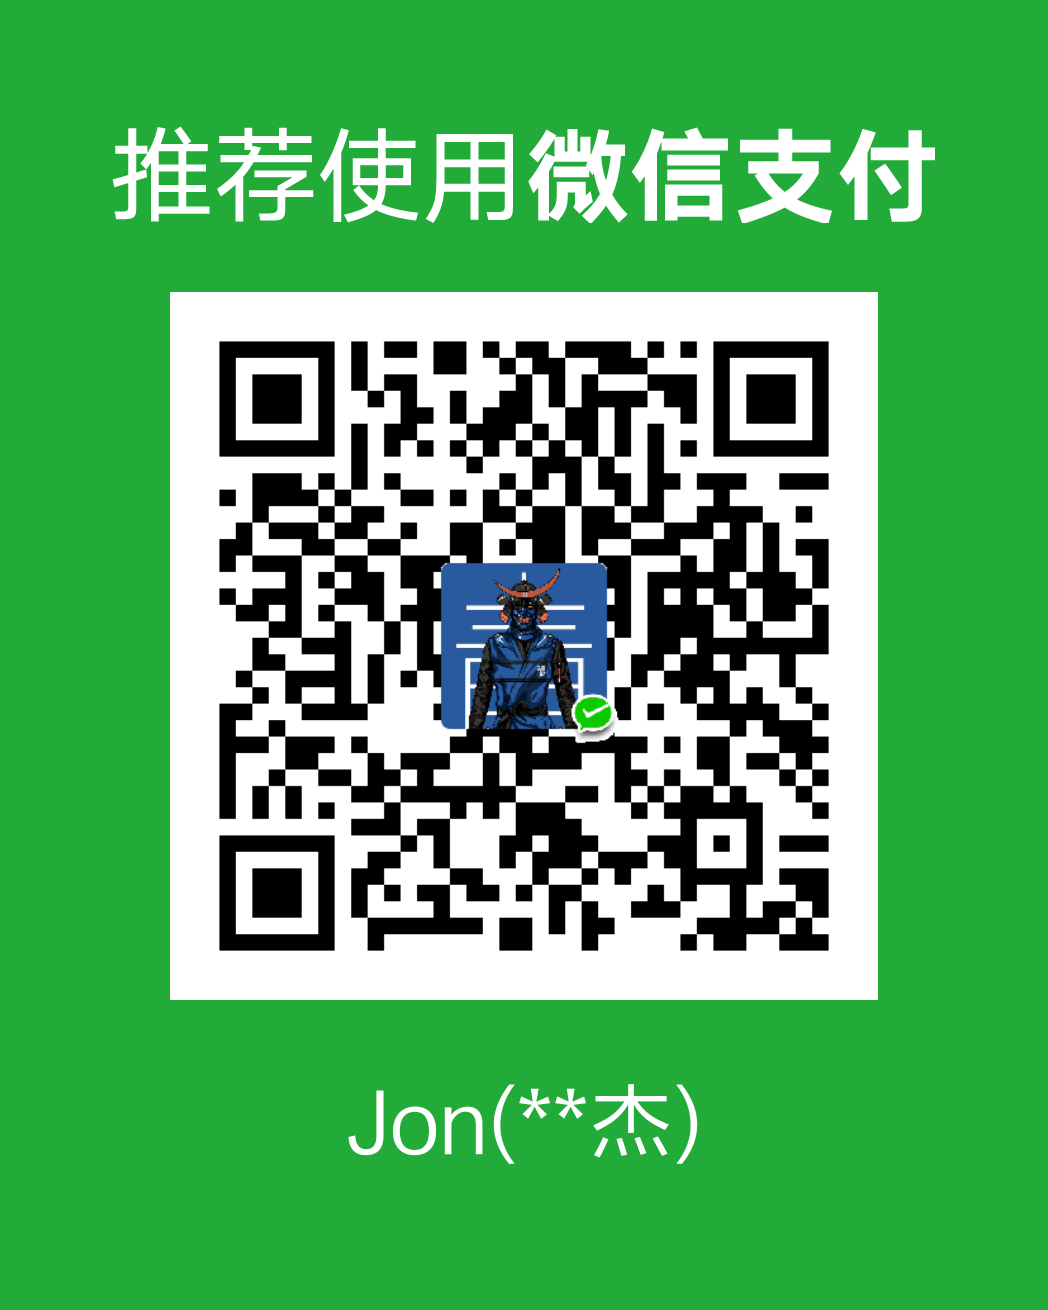 Jon WeChat Pay